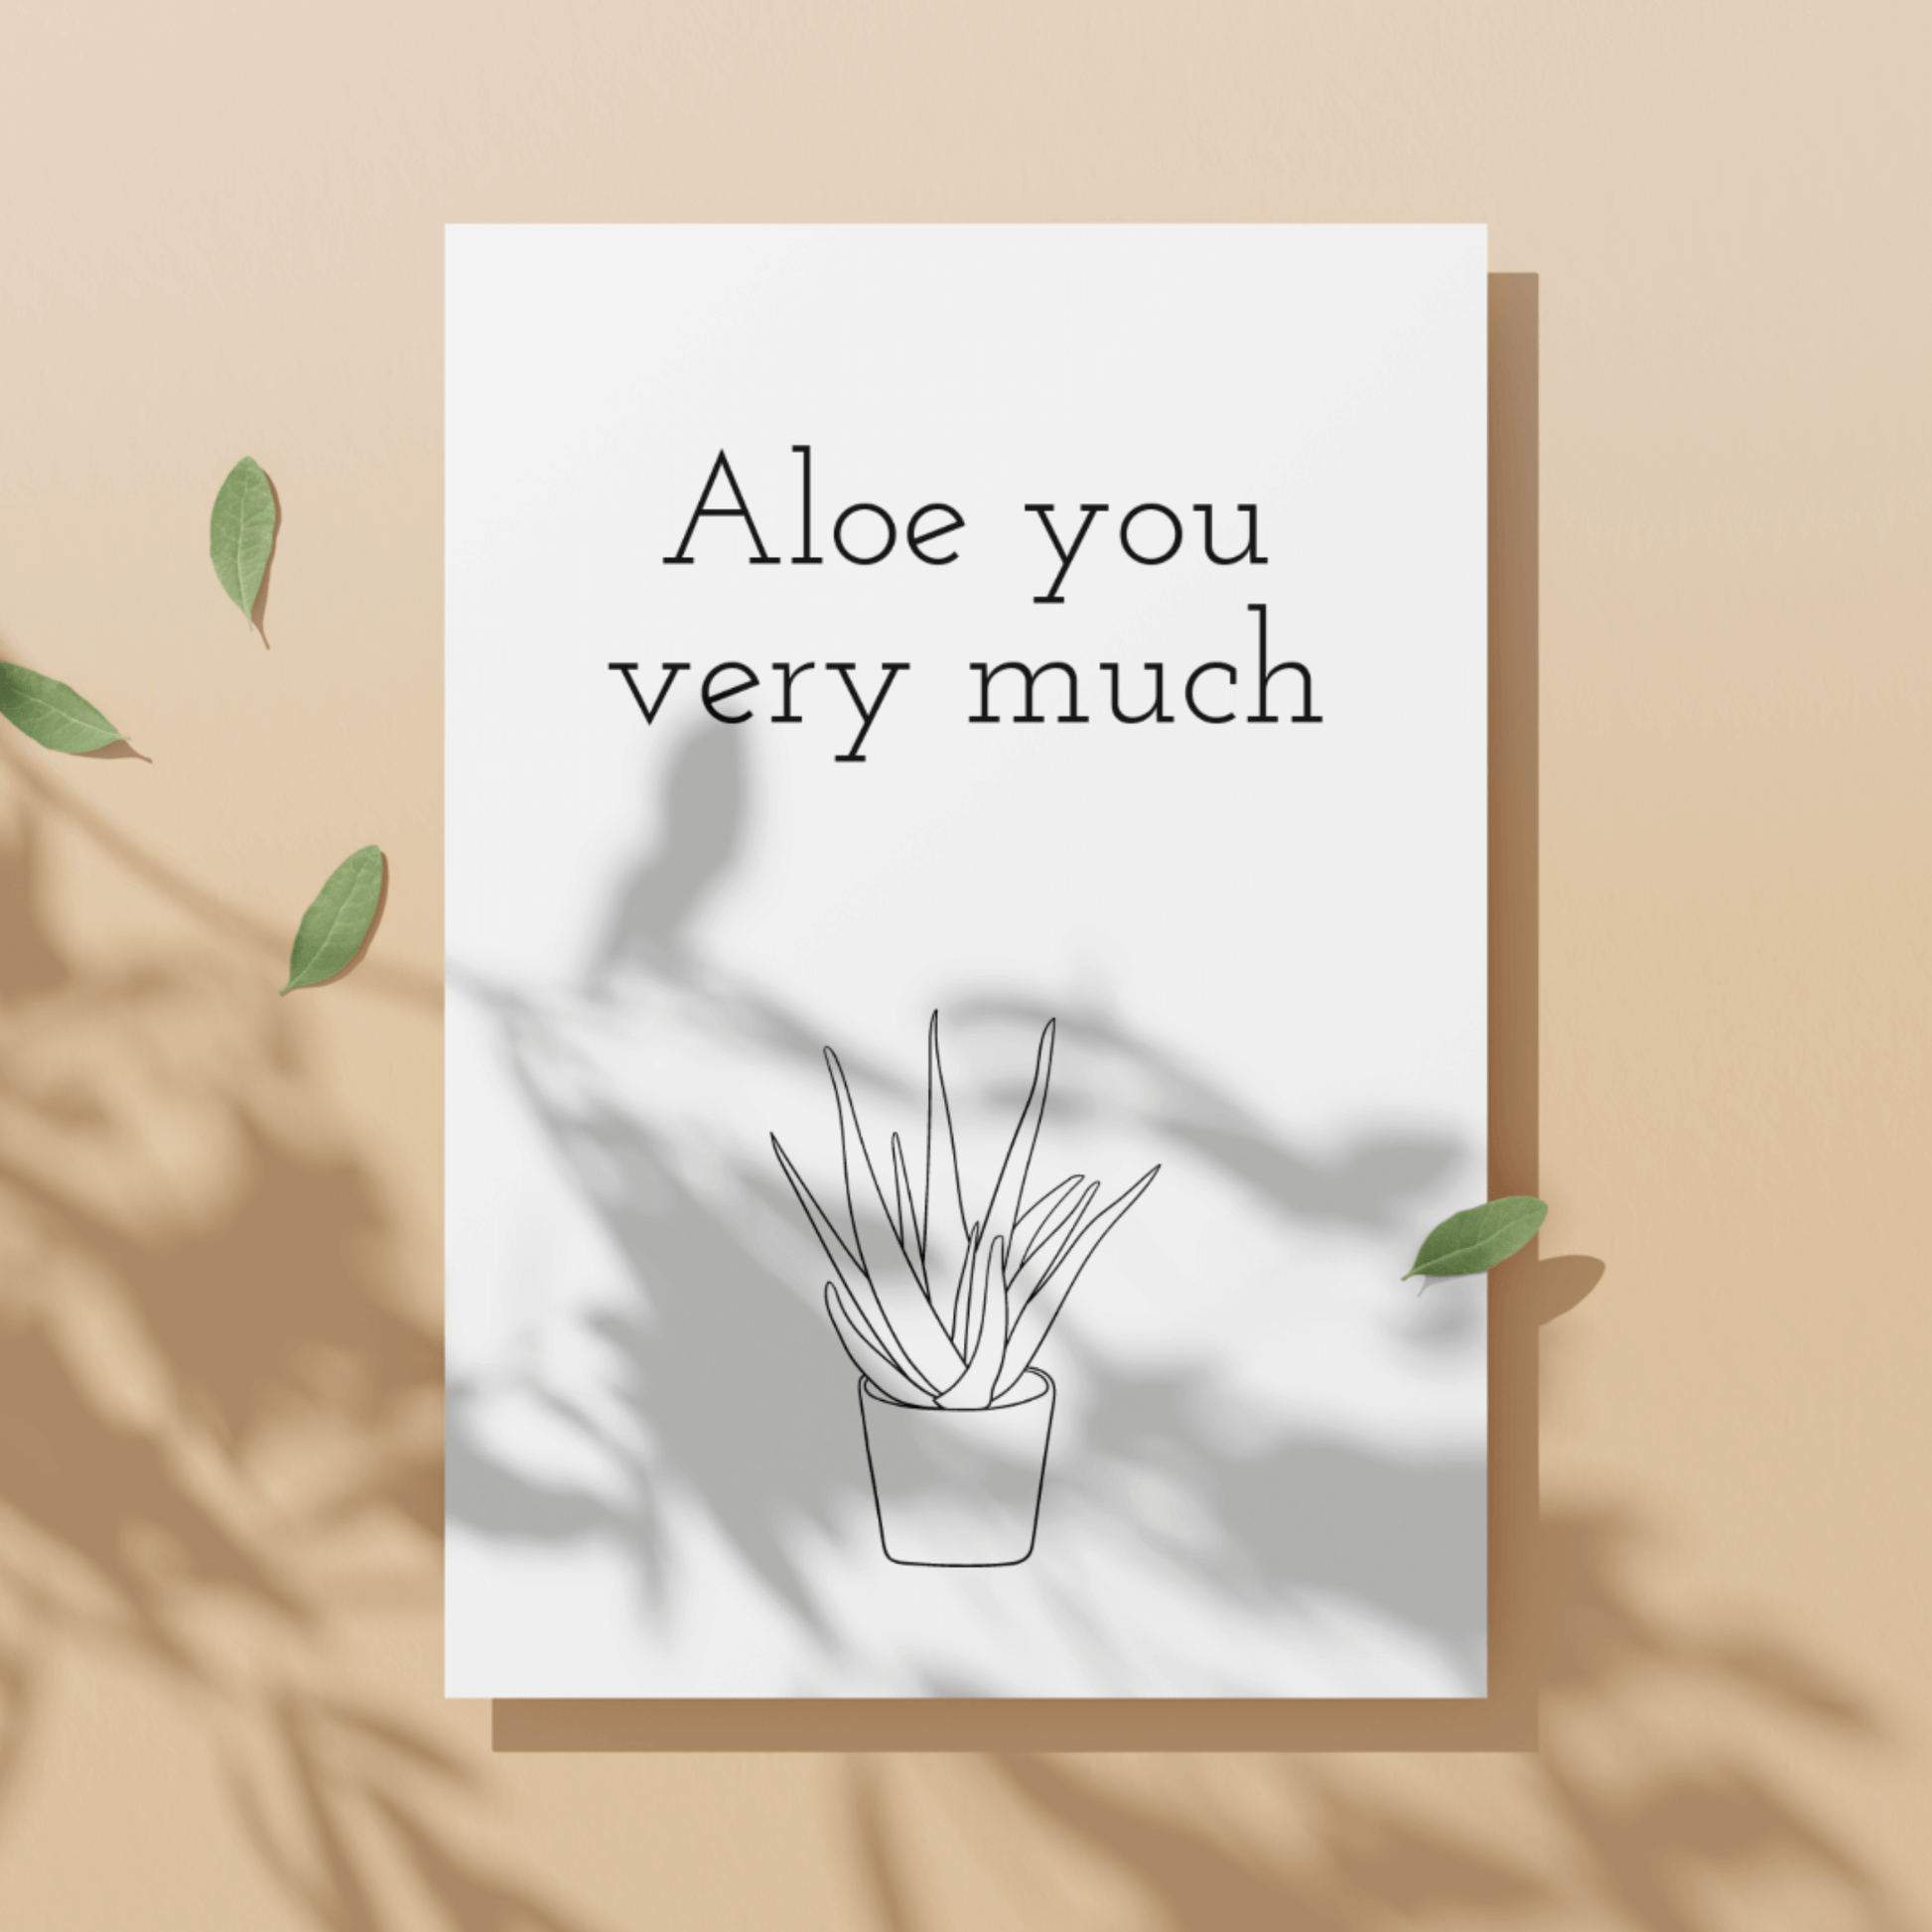 Little Kraken's Aloe You Very Much | Funny Love Anniversary Card | Funny Aloe Vera Love Card, Love Cards for £3.50 each